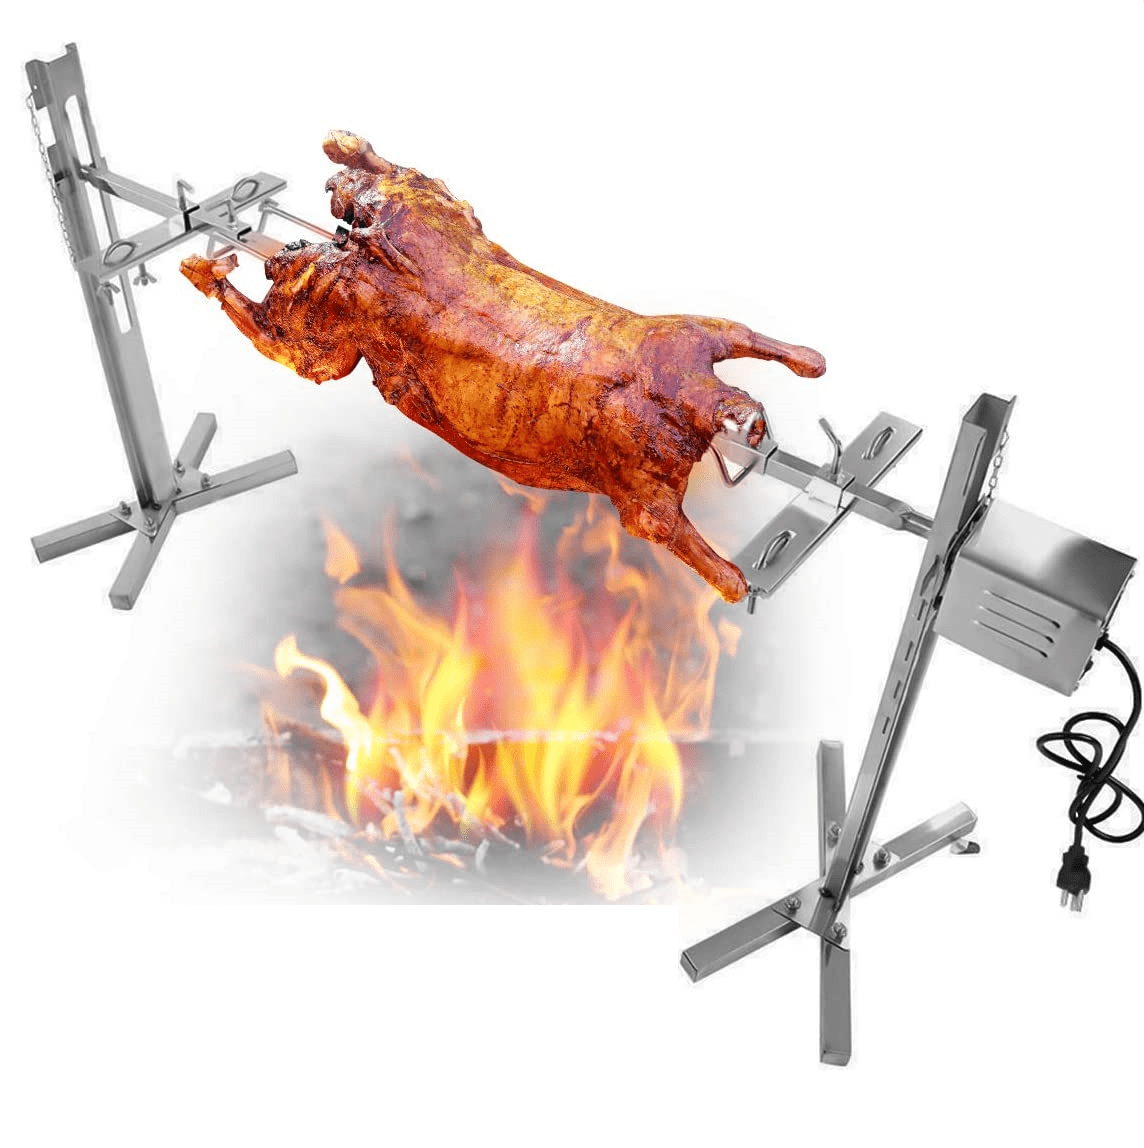 Large BBQ Grill & Fire Pit Rotisserie Spit Roaster Rod Pig Turkey 15W Motor Kit 